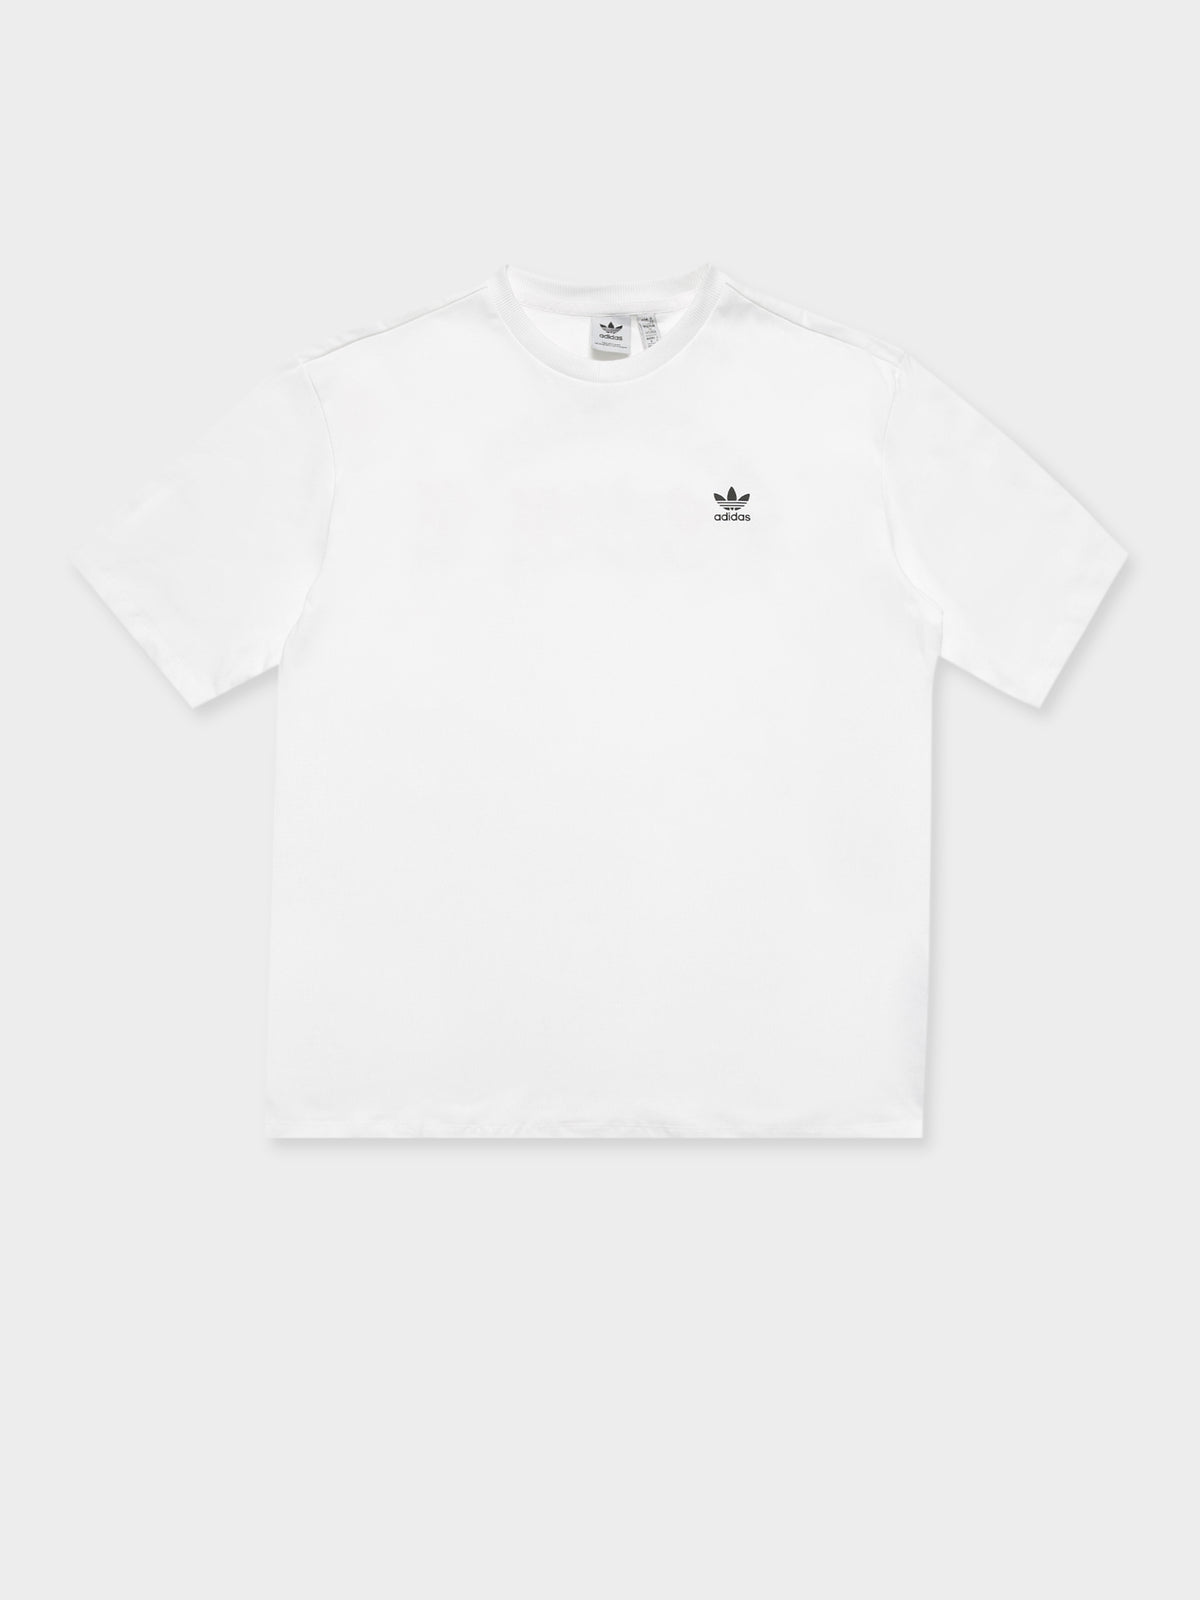 Always Original Loose Graphic T-Shirt in White